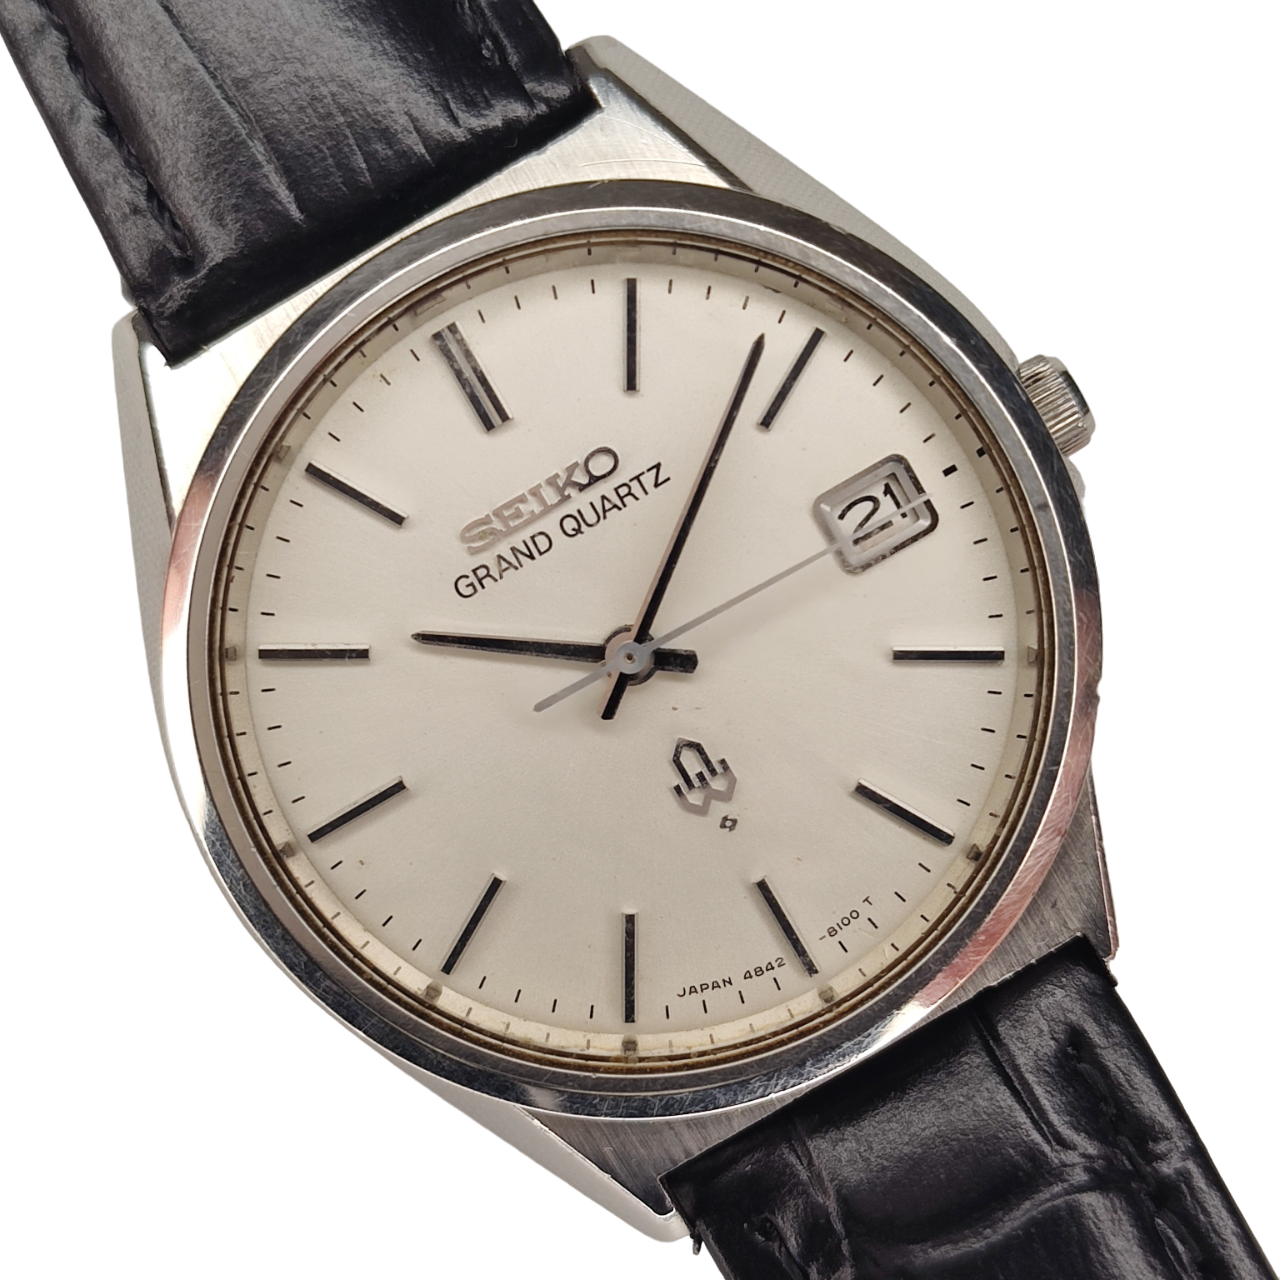 SEIKO GRAND QUARTZ 9940-8010 1978 年腕時計 - 腕時計(アナログ)